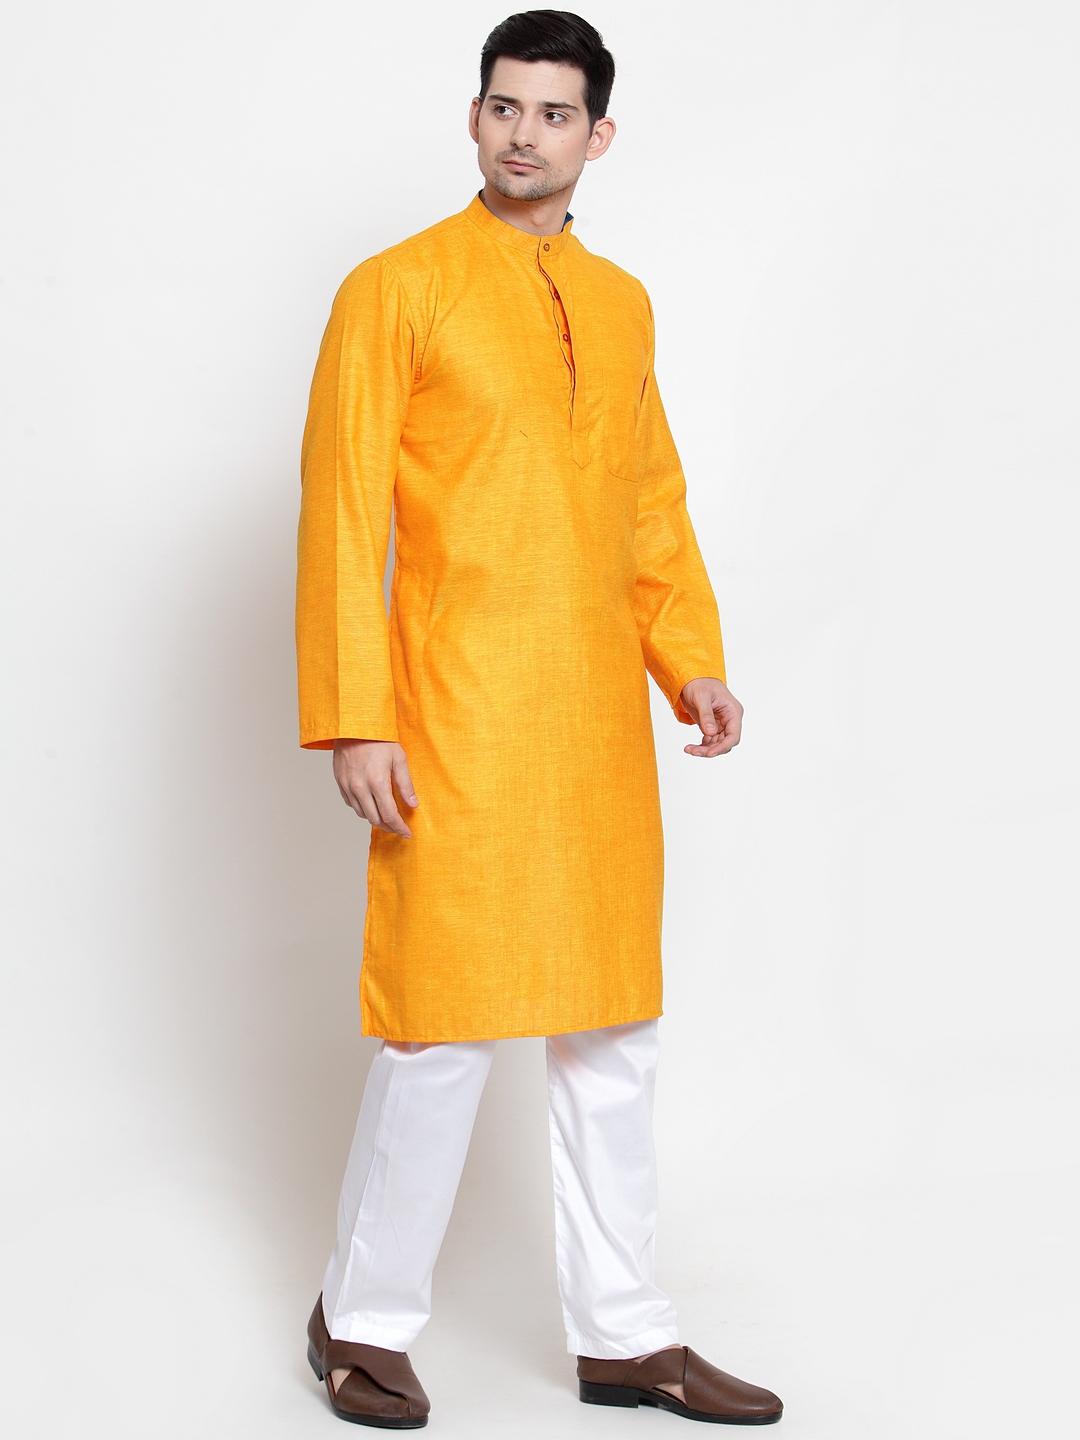 Dupion Silk Indian Kurta Pajama Men's Tradional Ethnic Party Wear Tunic ...